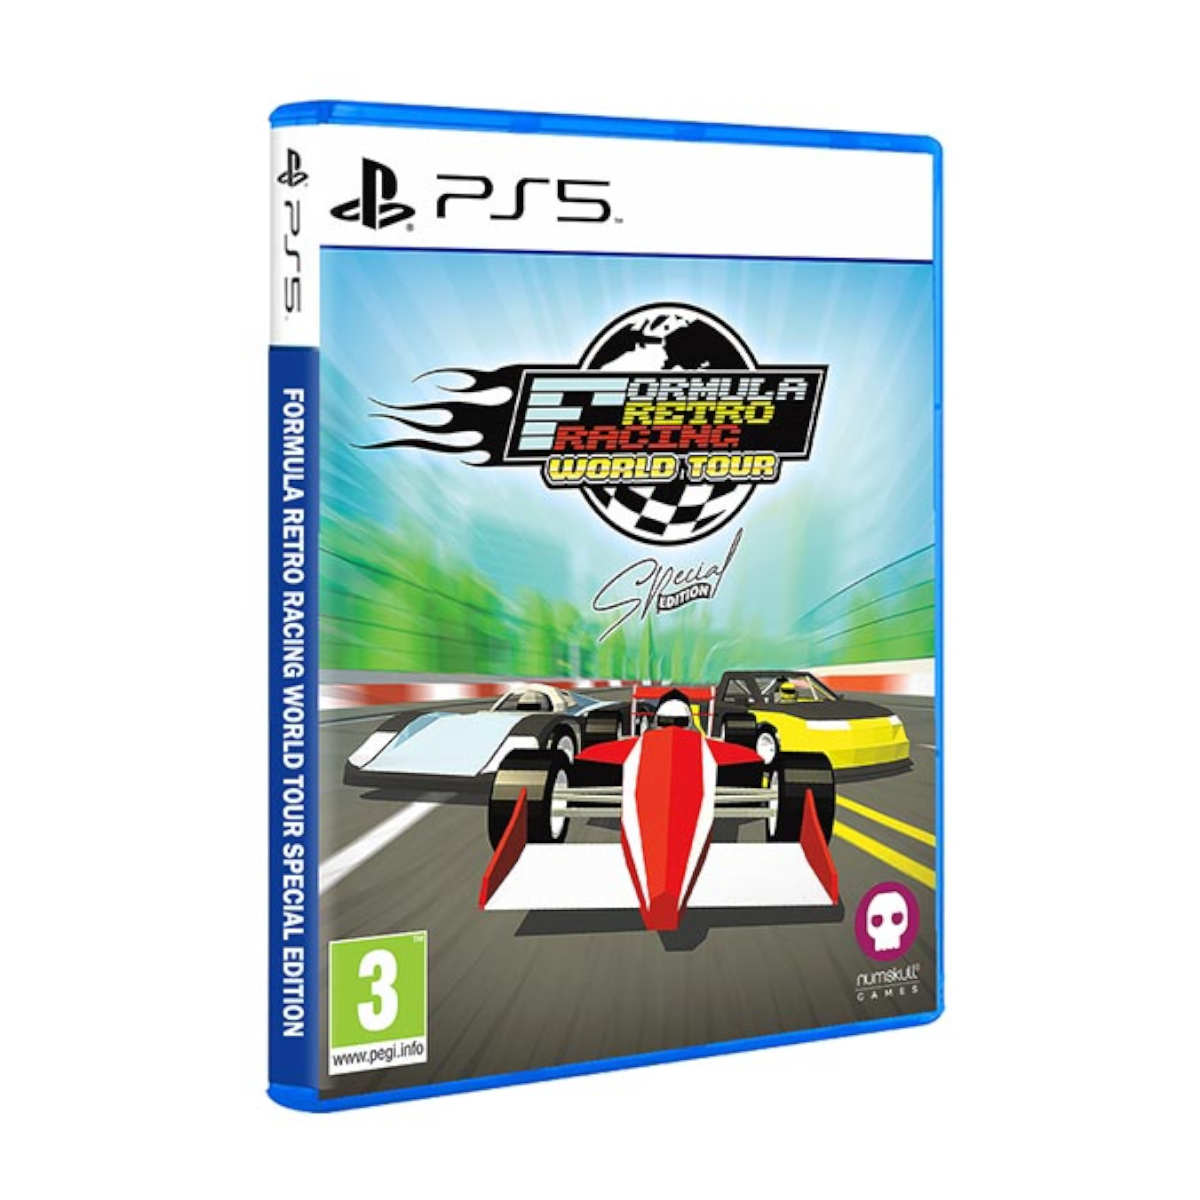 Buy Formula Retro Racing World Tour Special Edition PS5